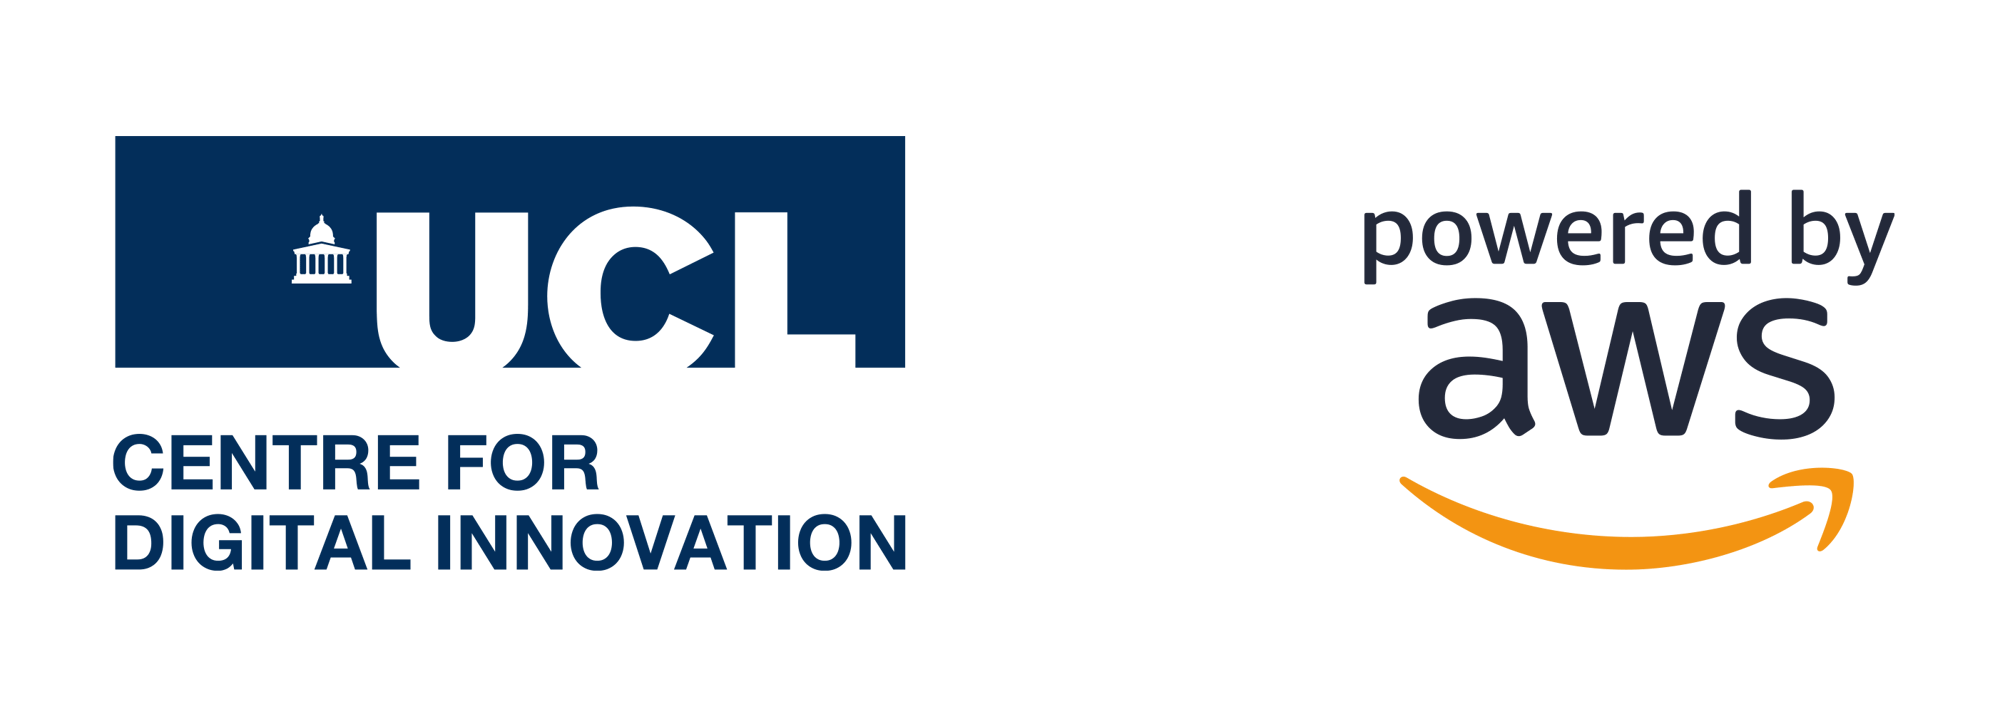 UCL CDI powered by AWS horizontal logo (1)